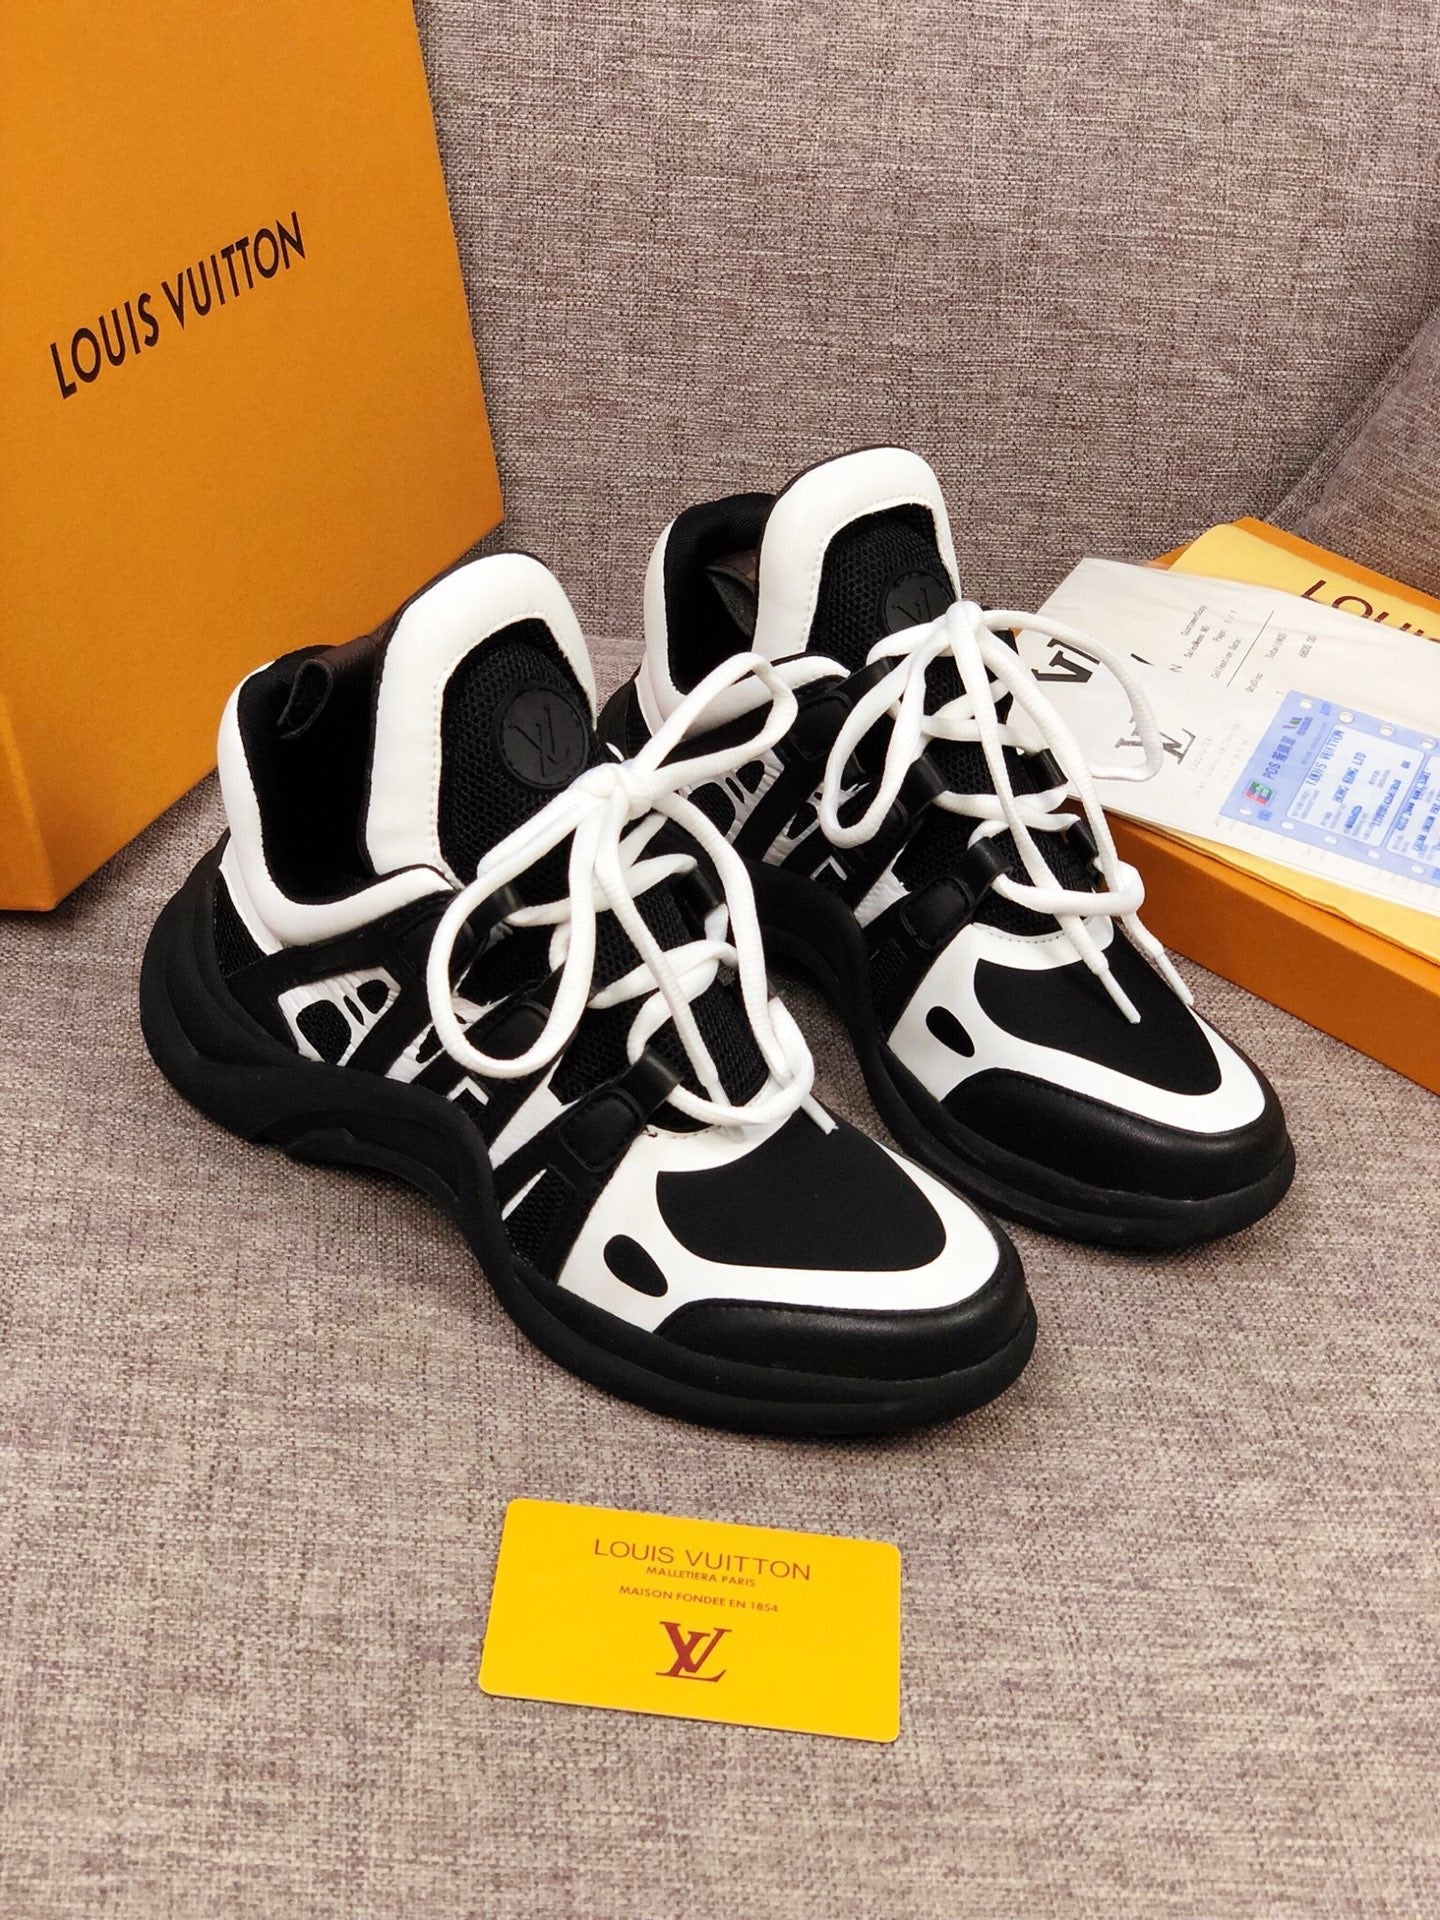 EI -LUV Archlight Black White Sneaker